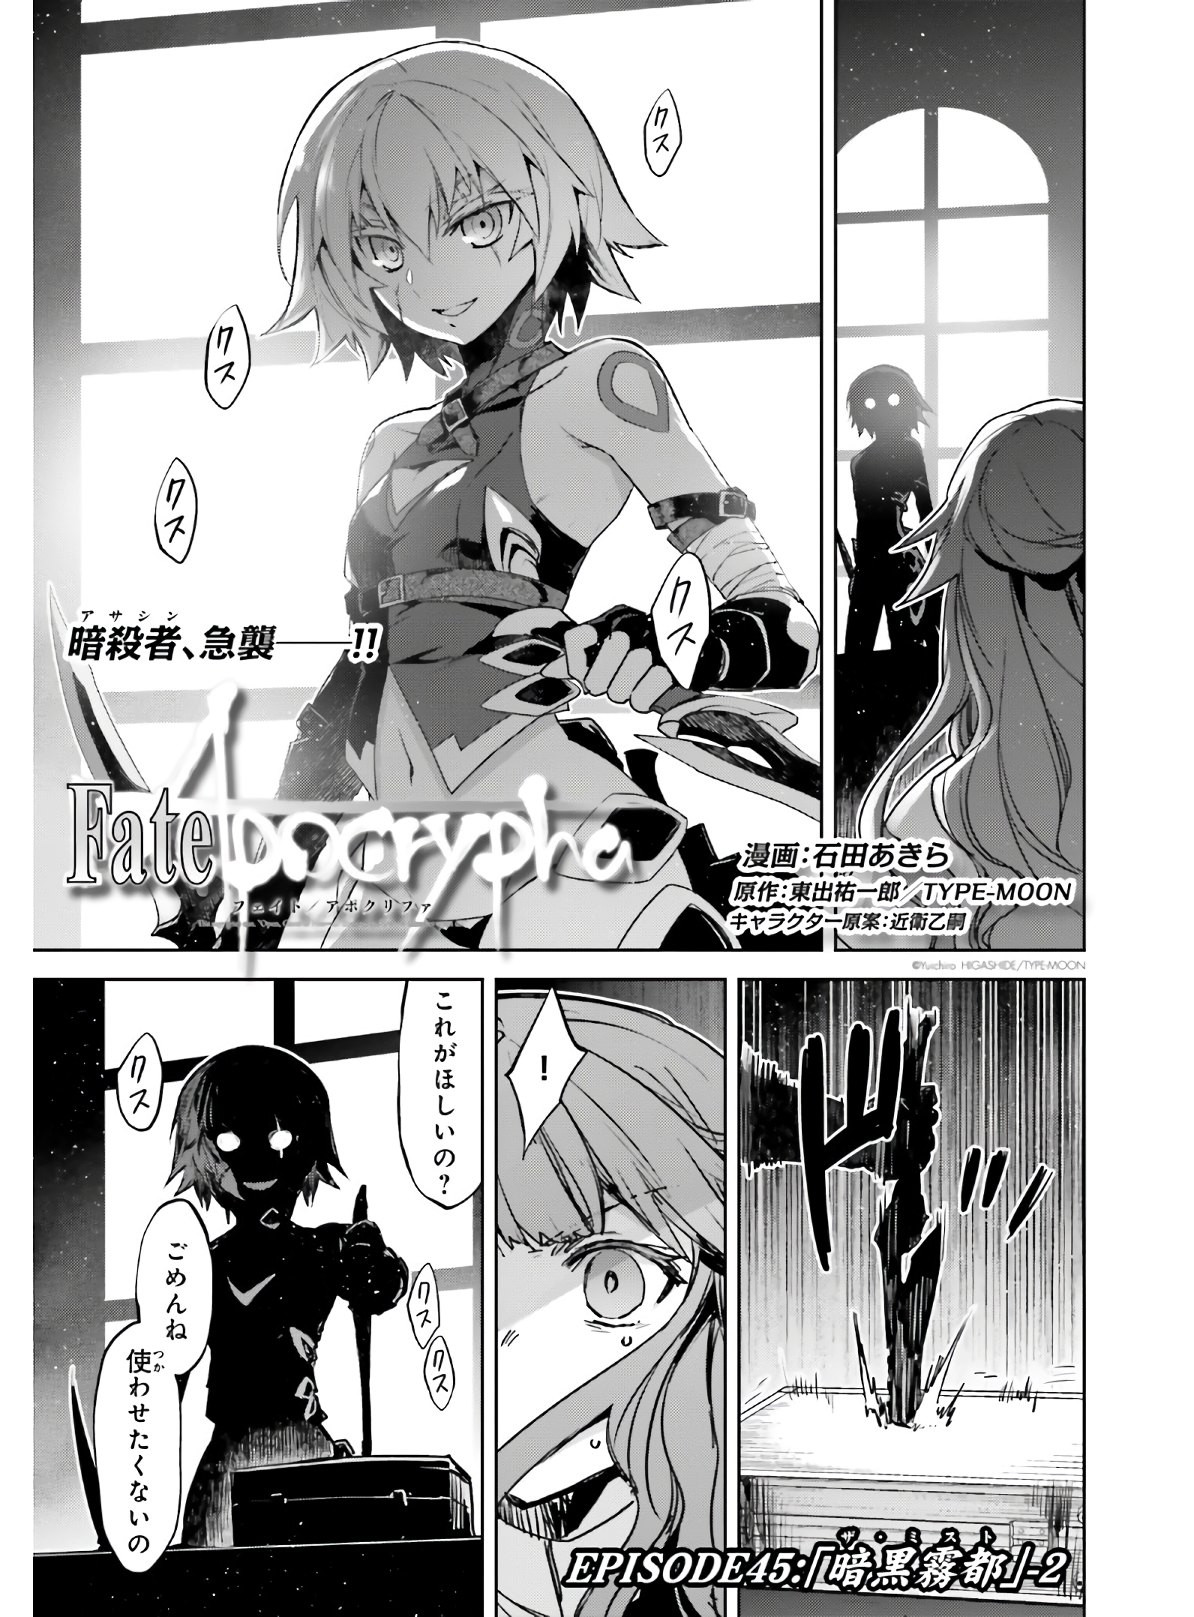 Fate Apocrypha Chapter 45 2 Page 1 Raw Sen Manga